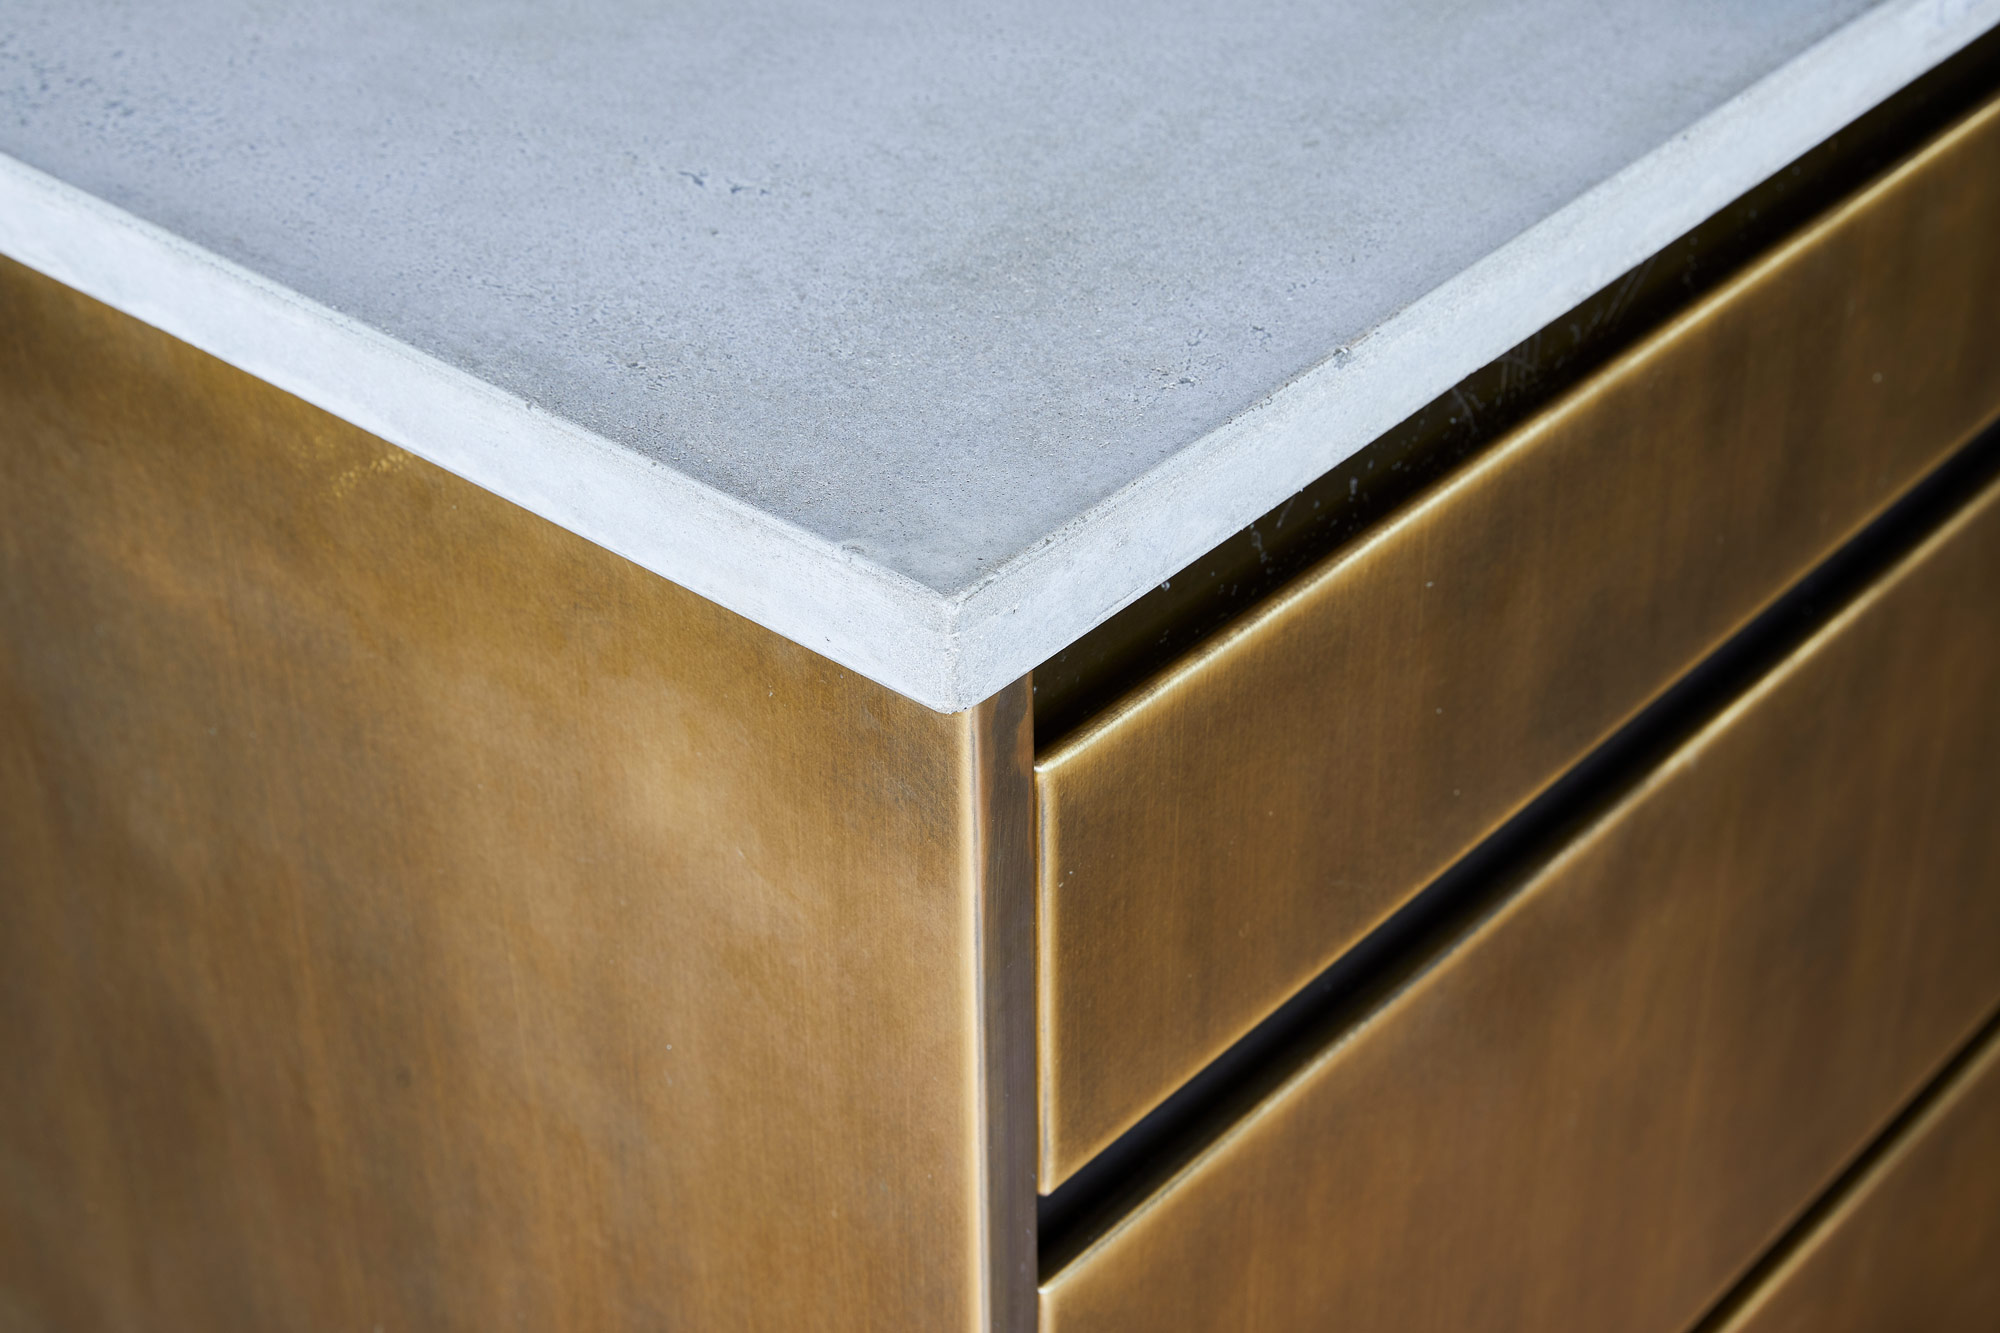 Solid concrete worktop on top of bespoke metal kitchen drawers